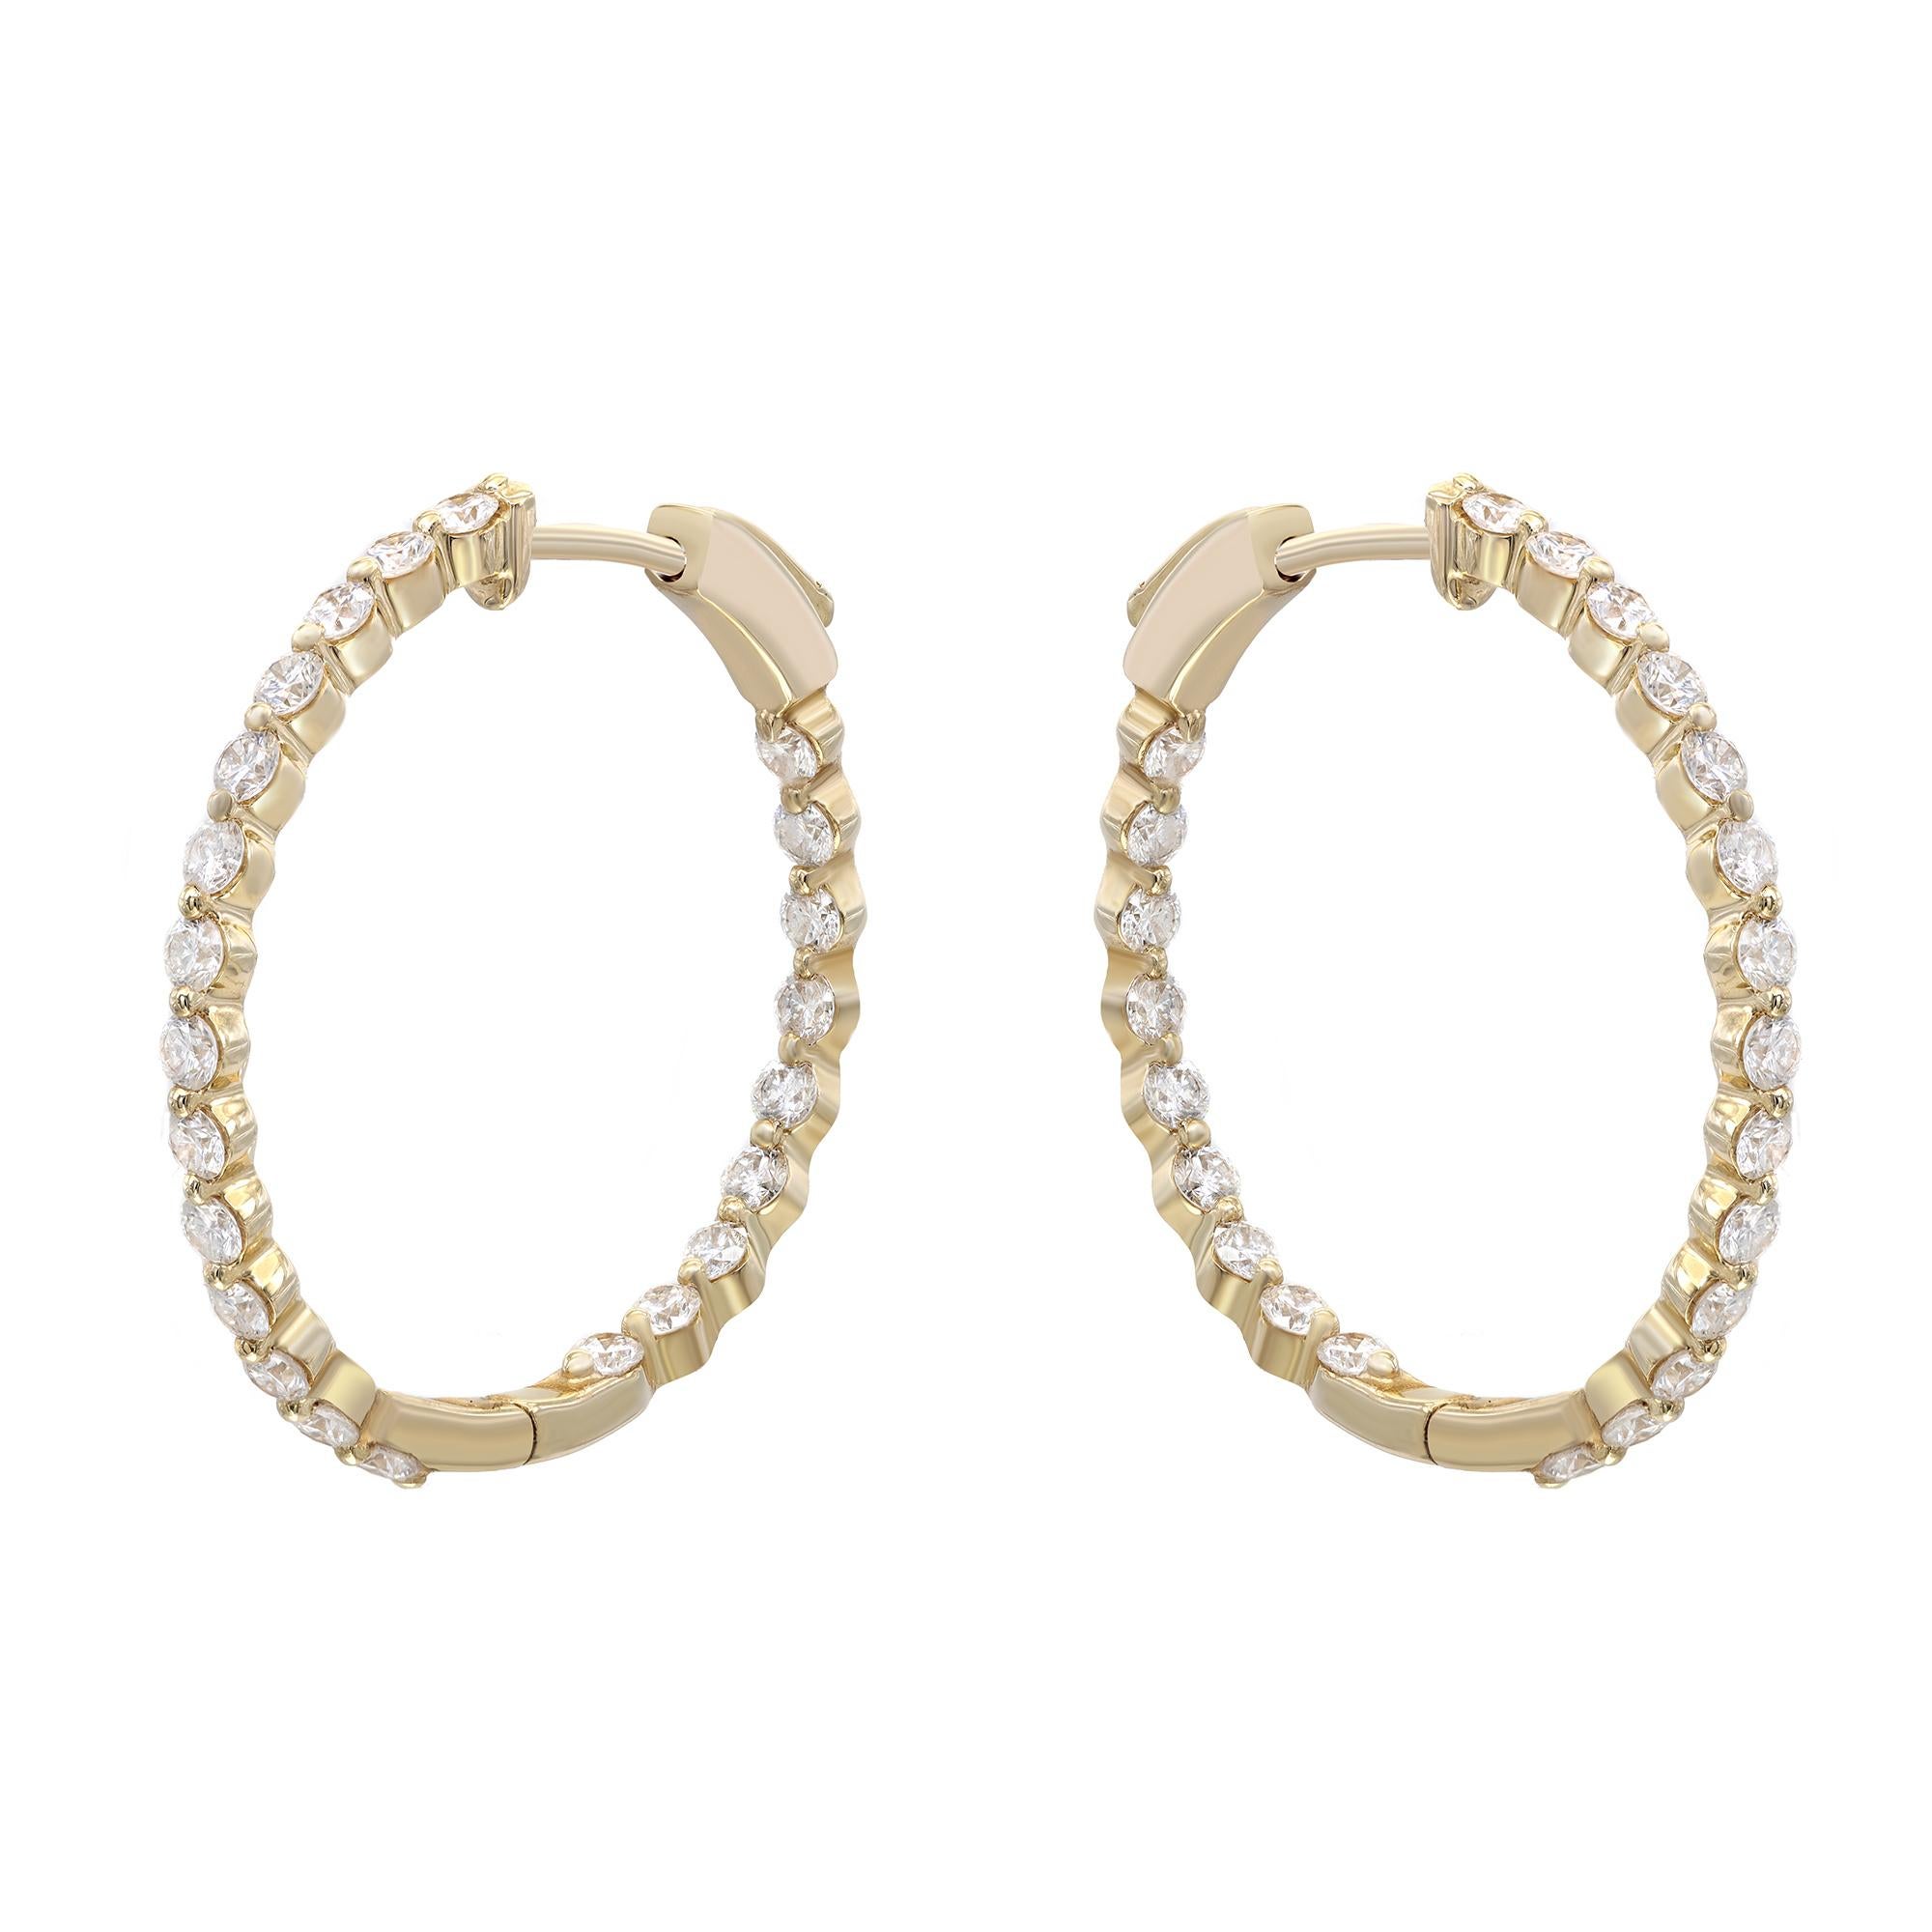 Modern Rachel Koen Brilliant Diamond Hoop Earrings 14K Yellow Gold 1.43Cttw For Sale